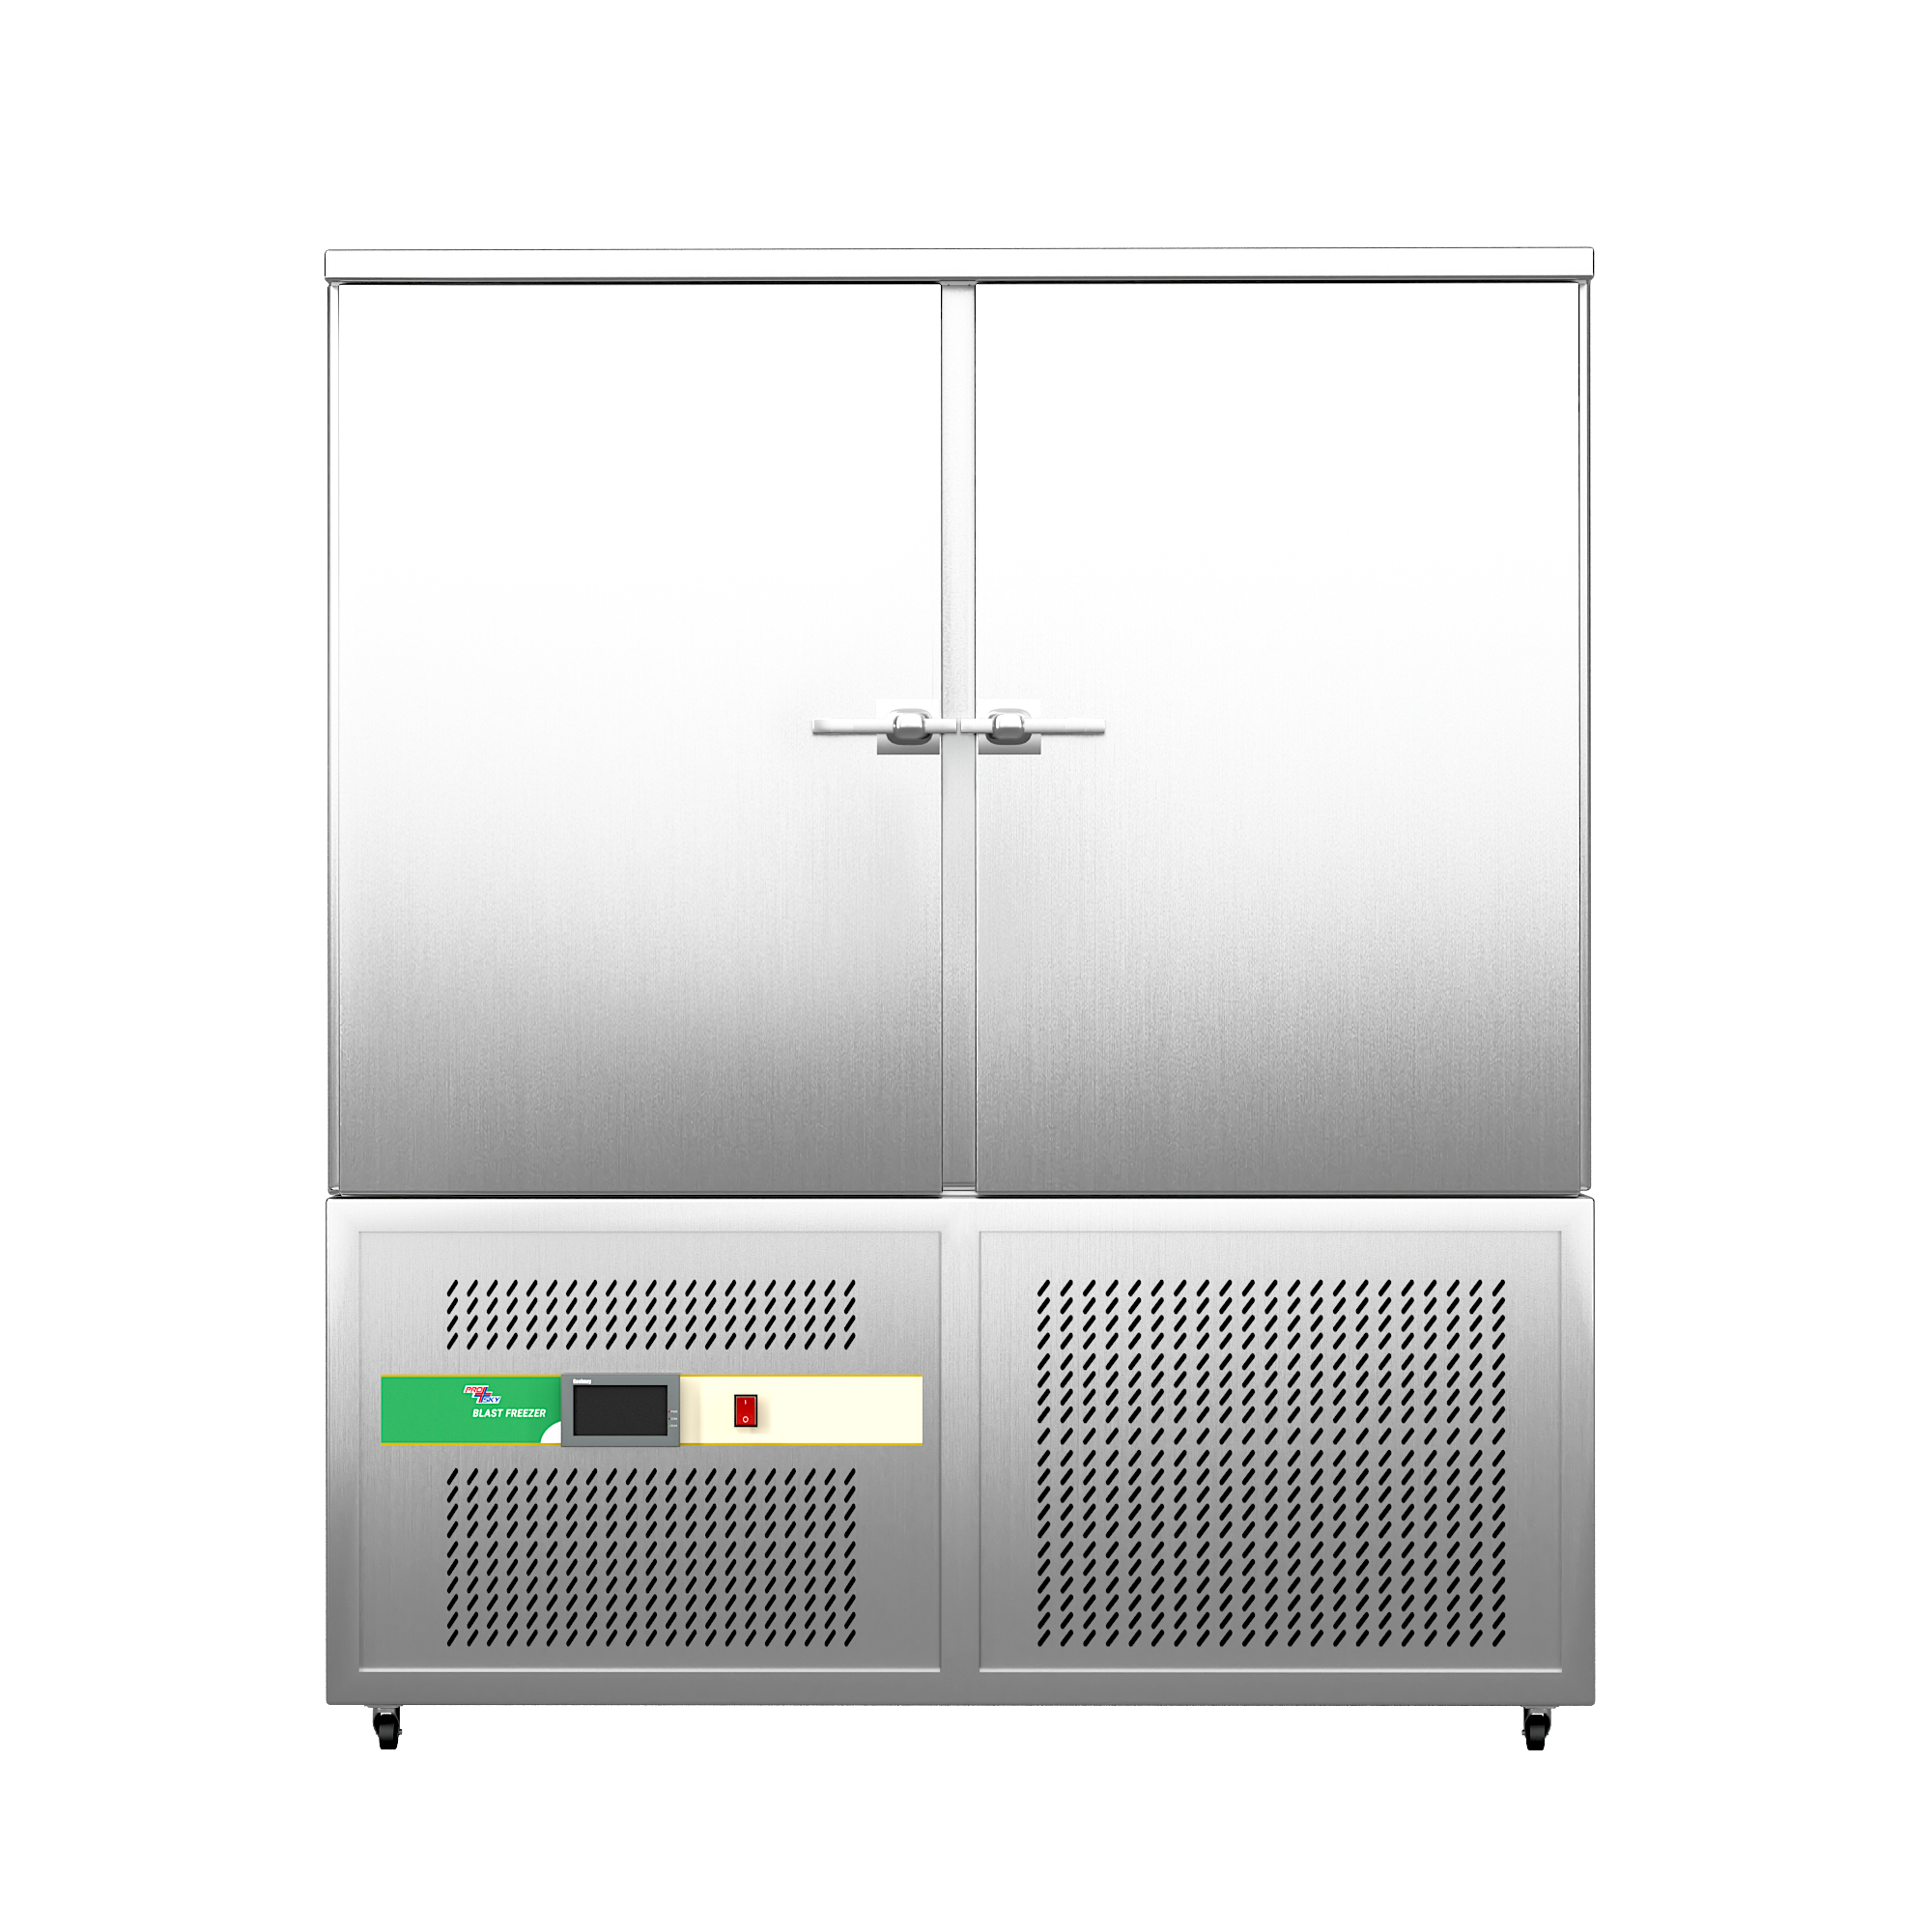 Prosky Saga 610L工业精密食品爆炸冷却器冰柜和面板